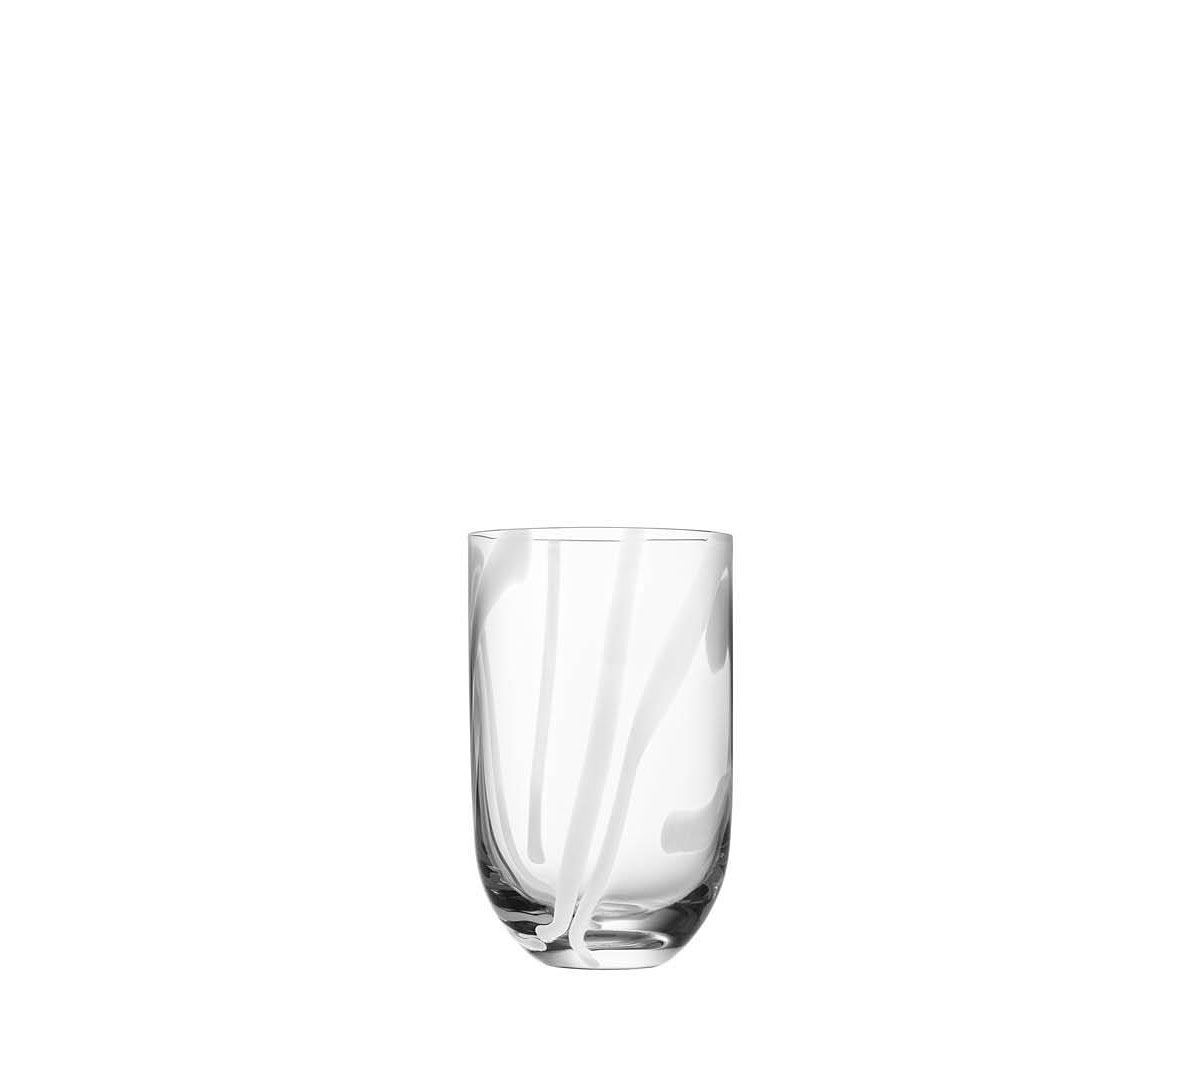 Kosta Boda Contrast Tumbler Glass, White